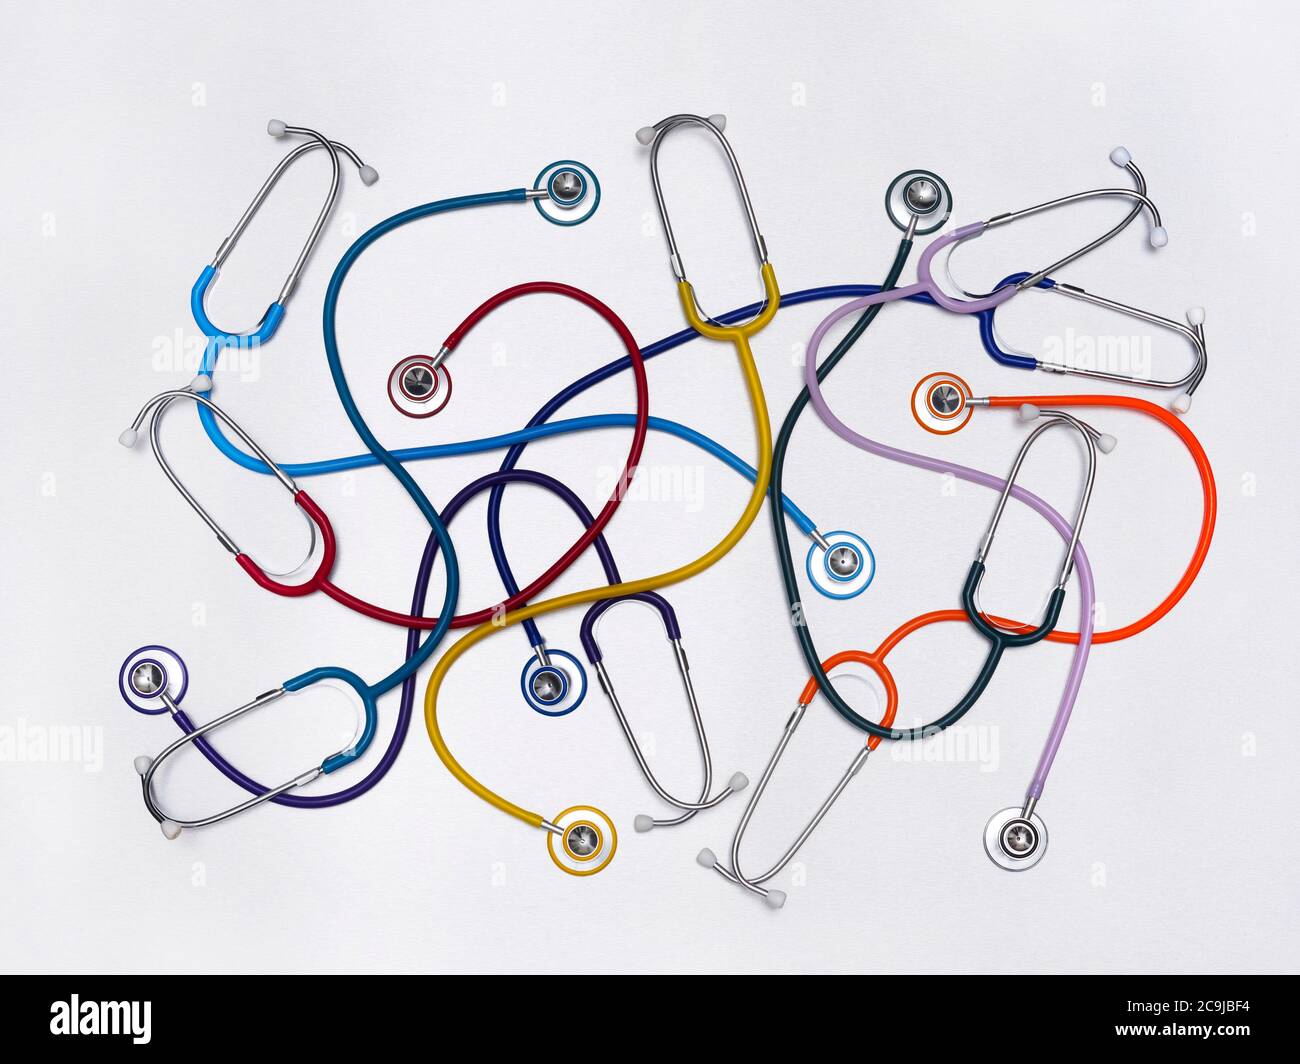 Multicoloured stethoscopes against a white background. Stock Photo